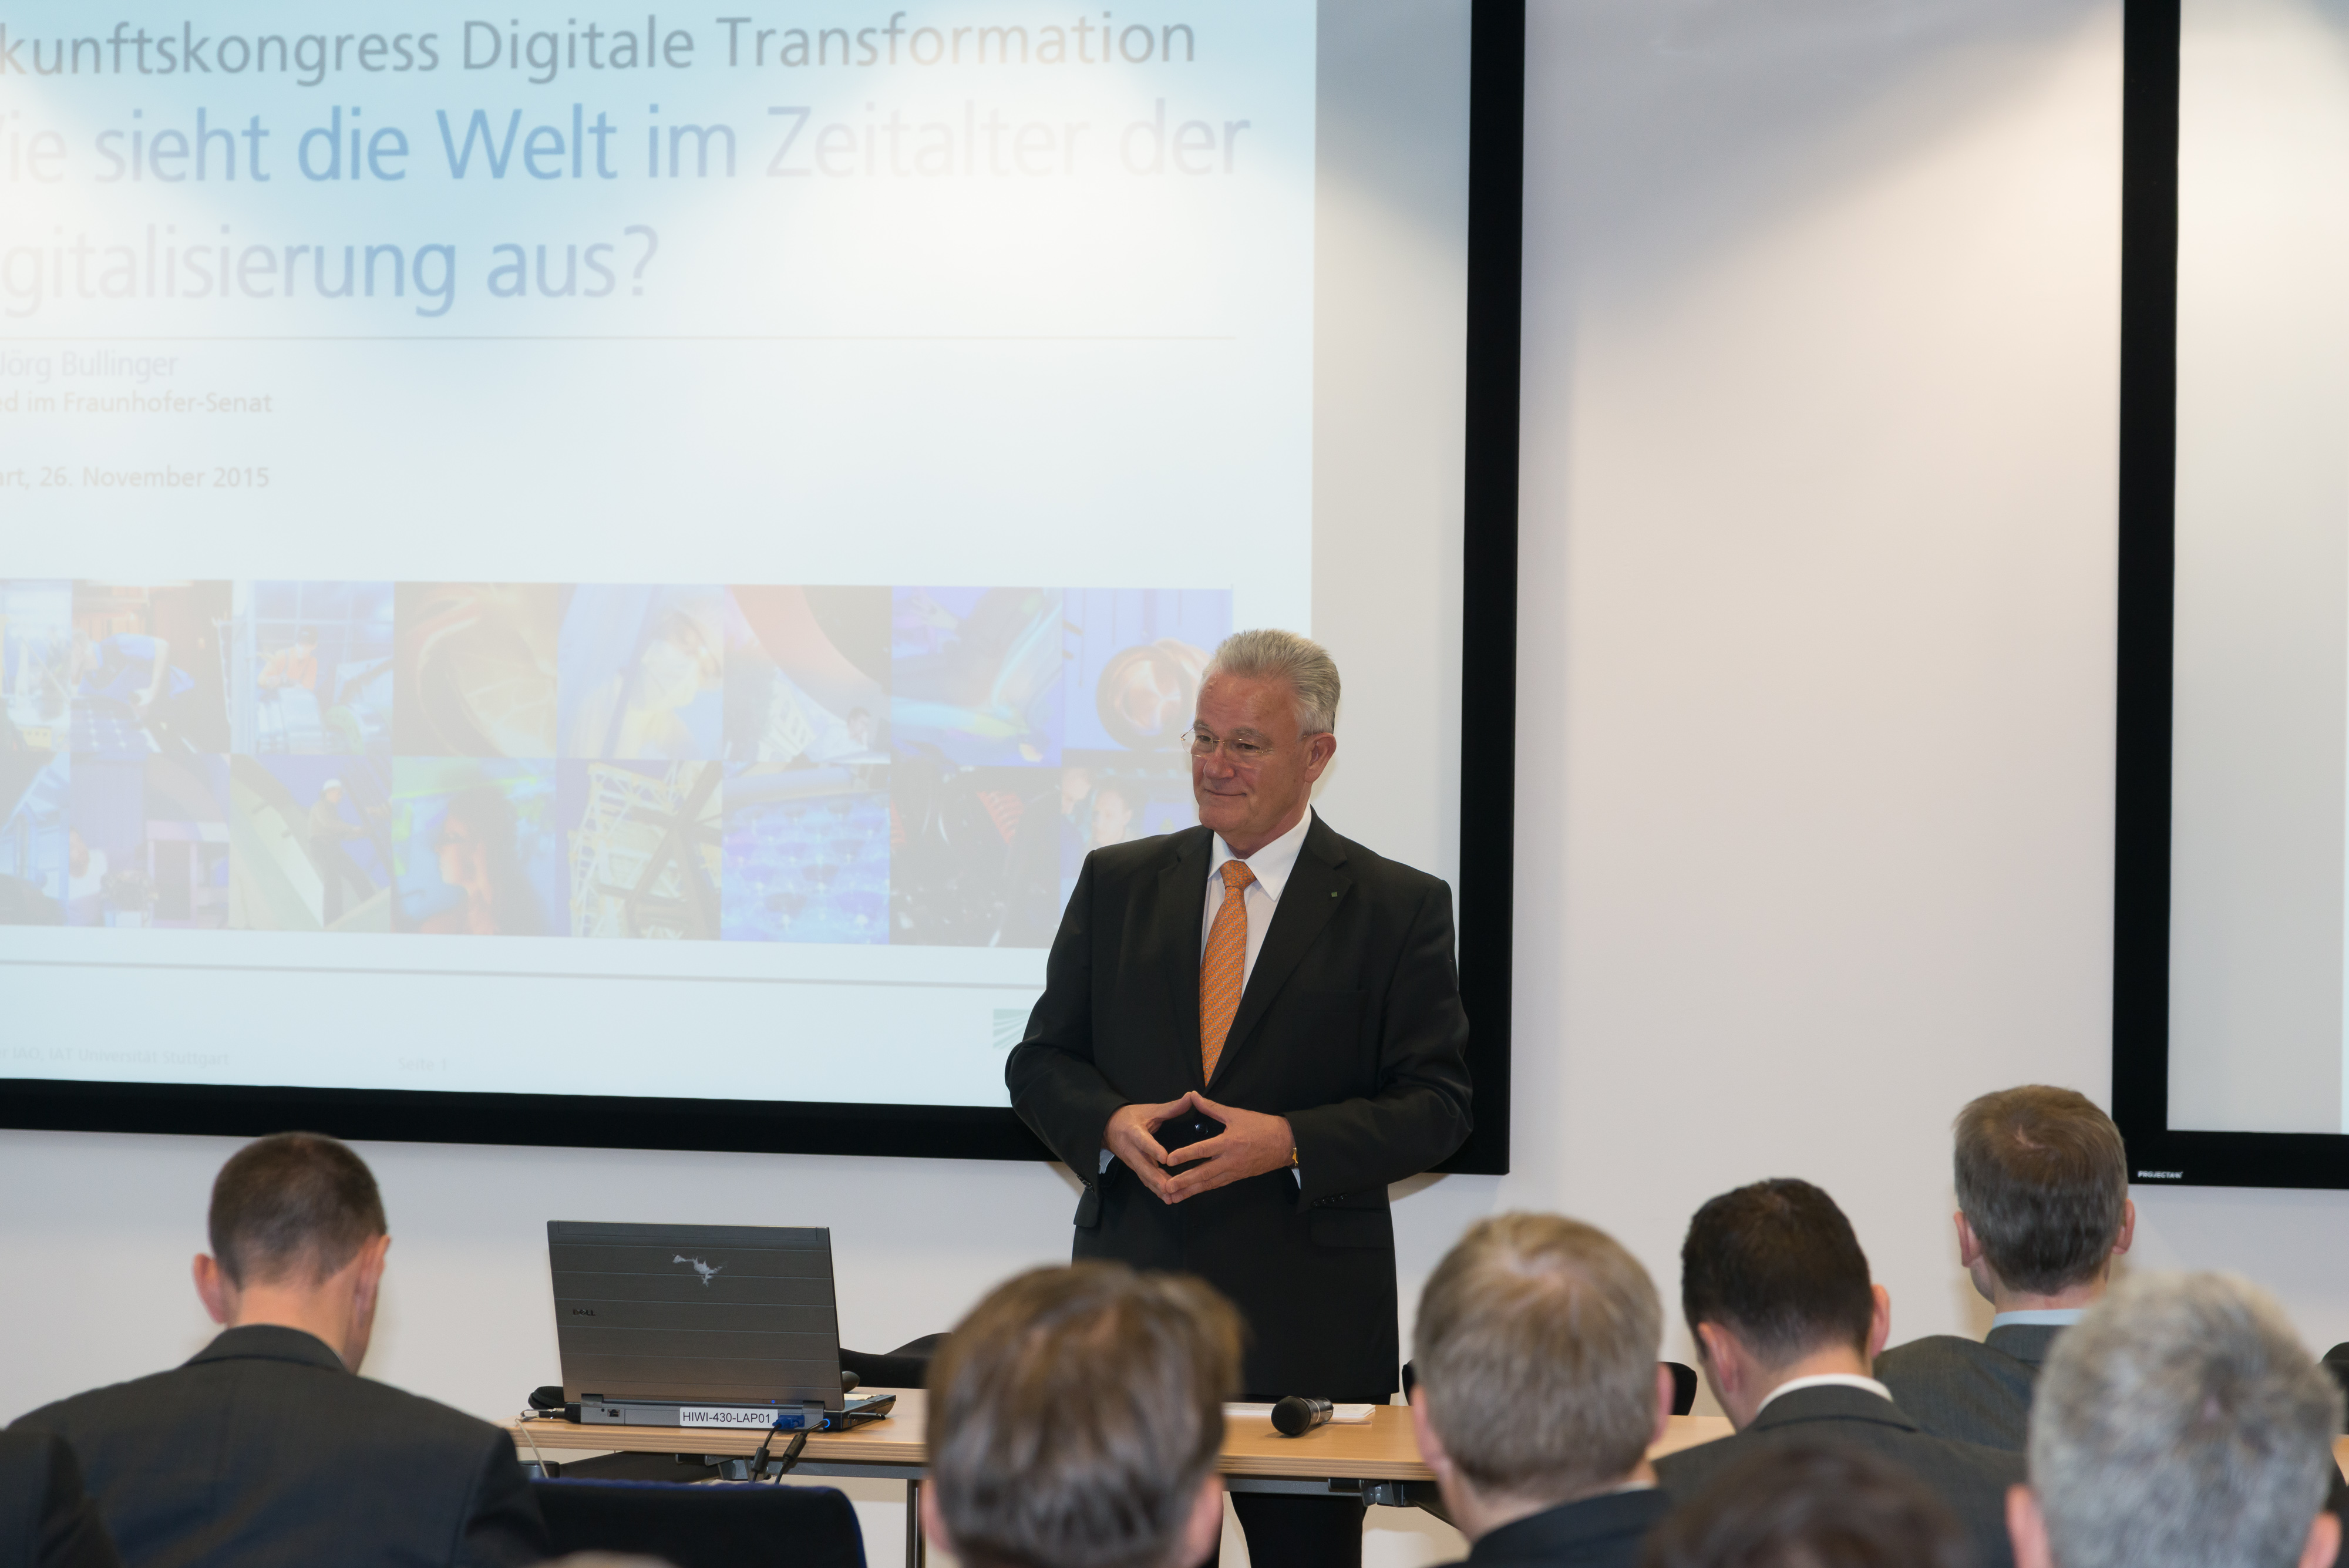 Zukunftskongress Digitale Transformation - Vortrag von Prof. Dr. Bullinger